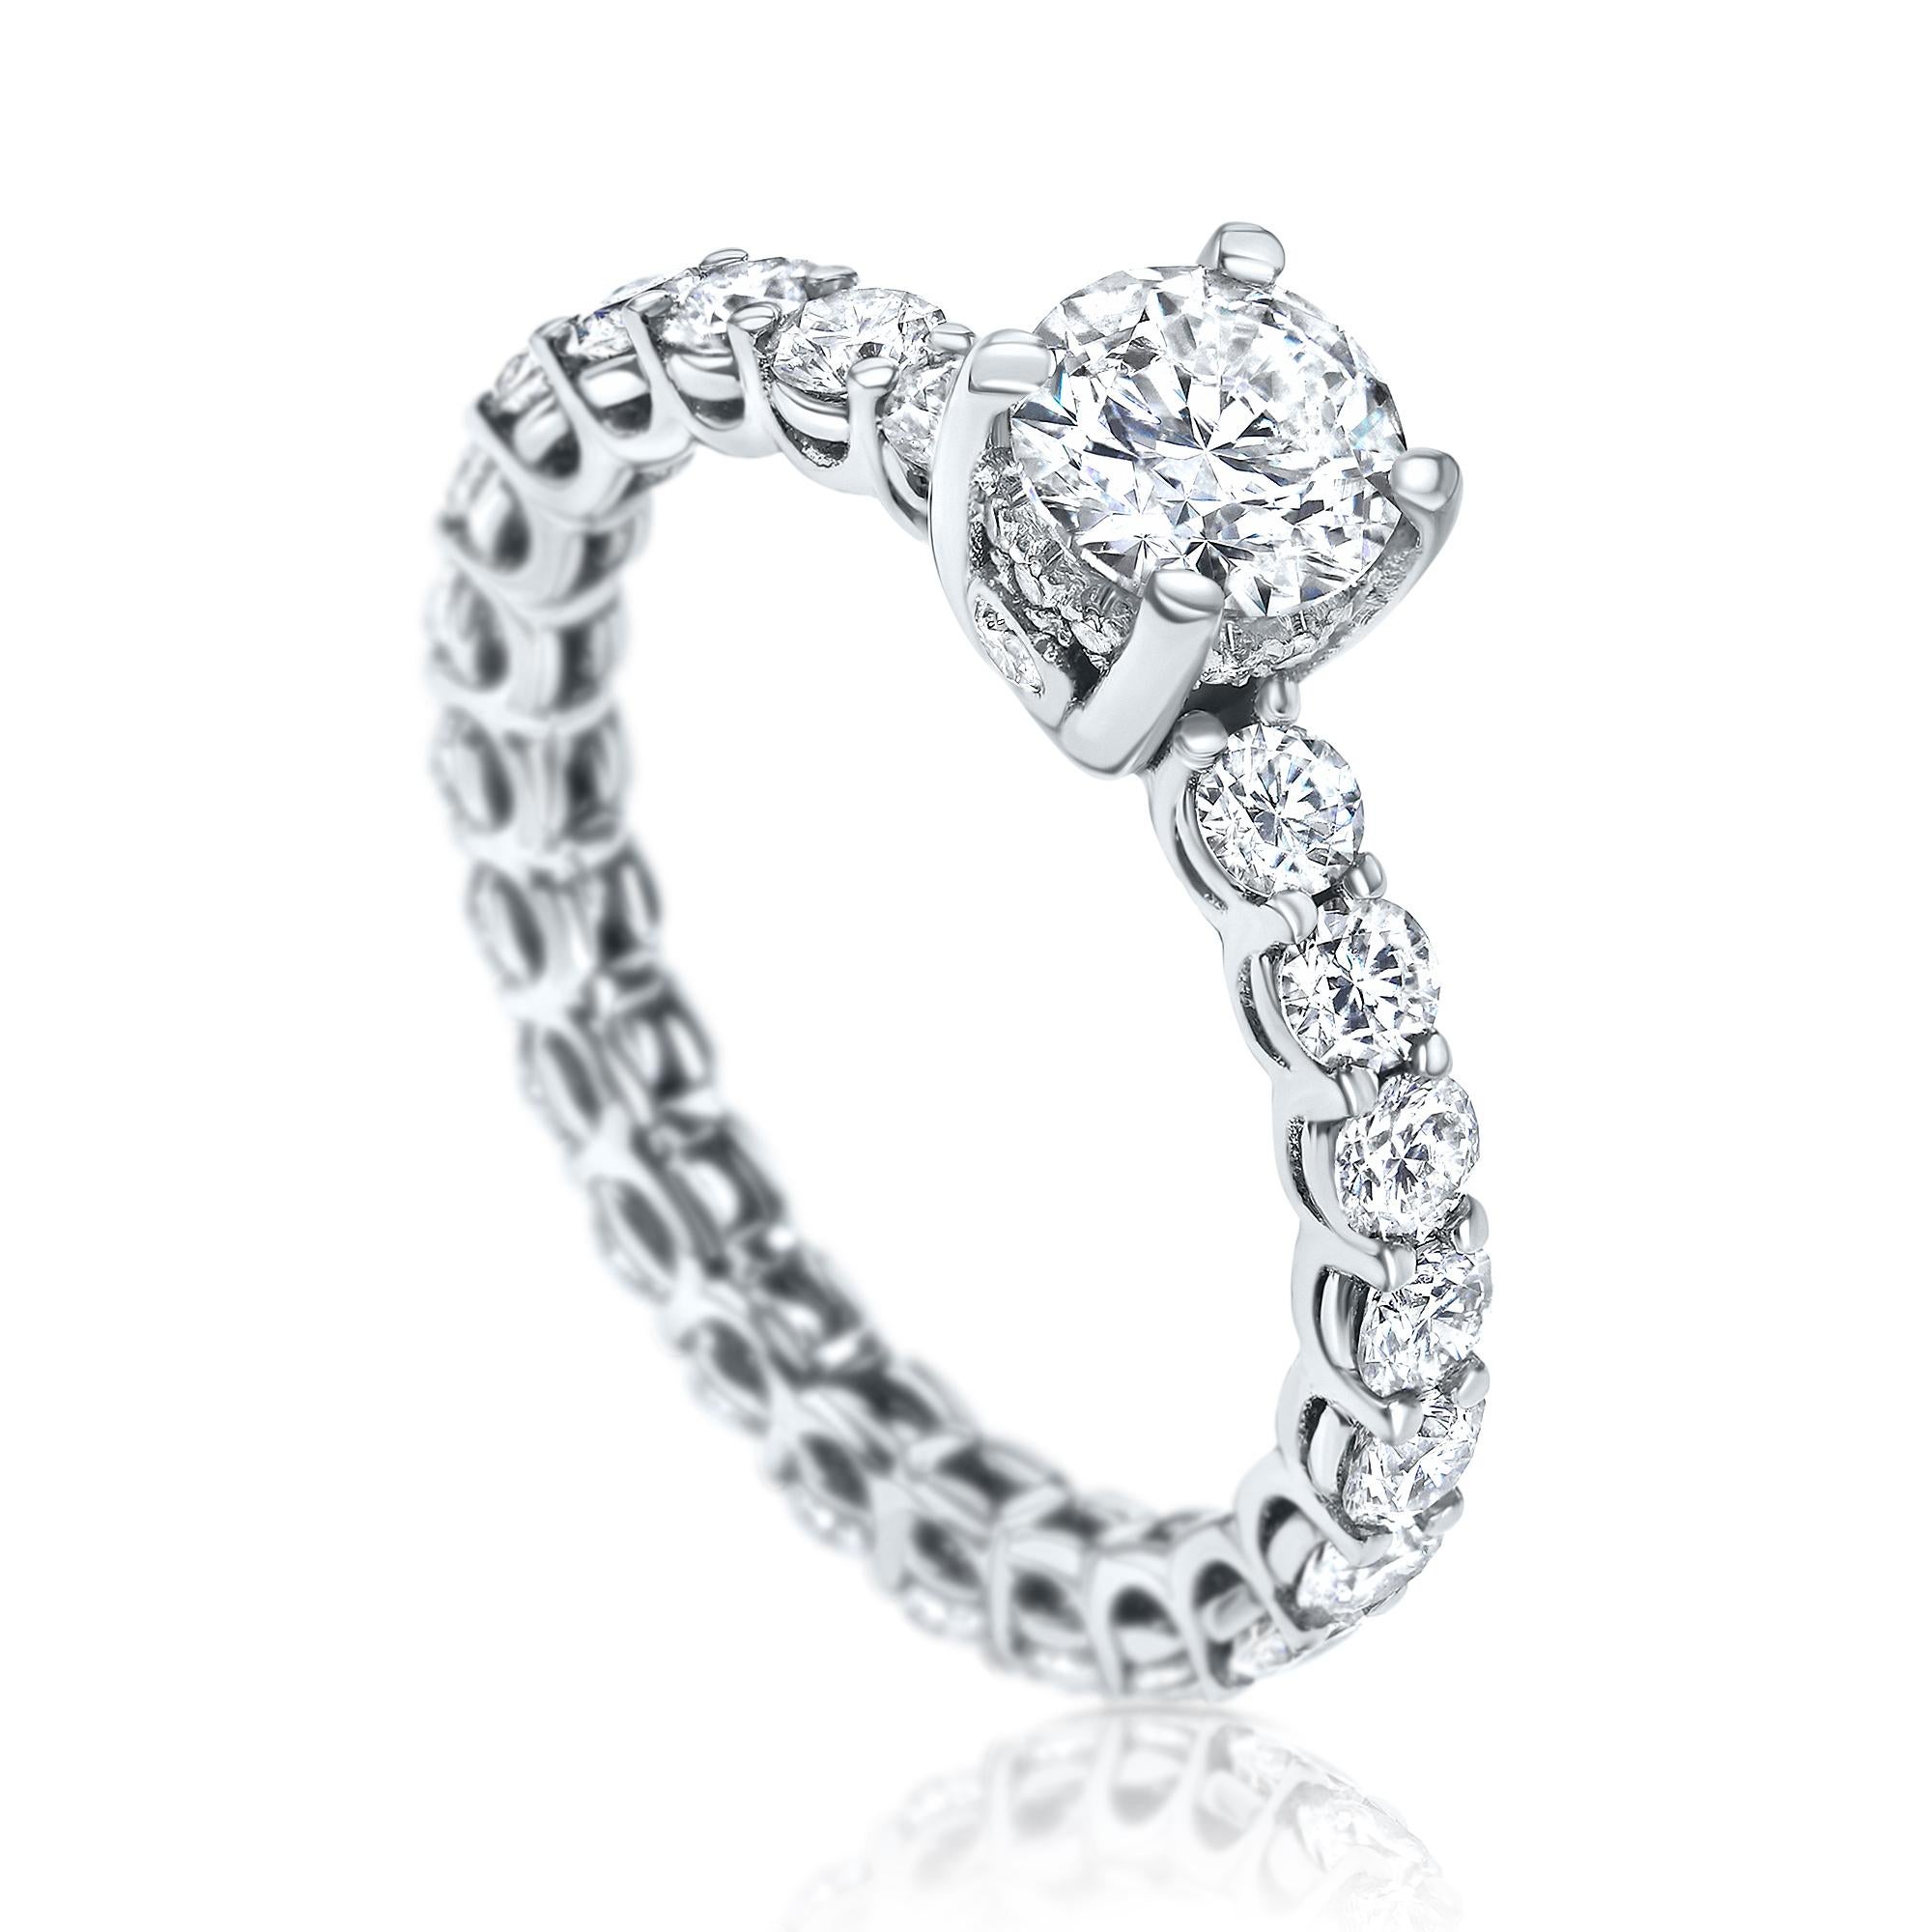 Round Cut Classic 2.24 Carat Melanya Diamond Ring in 14 Karat White Gold - Shlomit Rogel For Sale